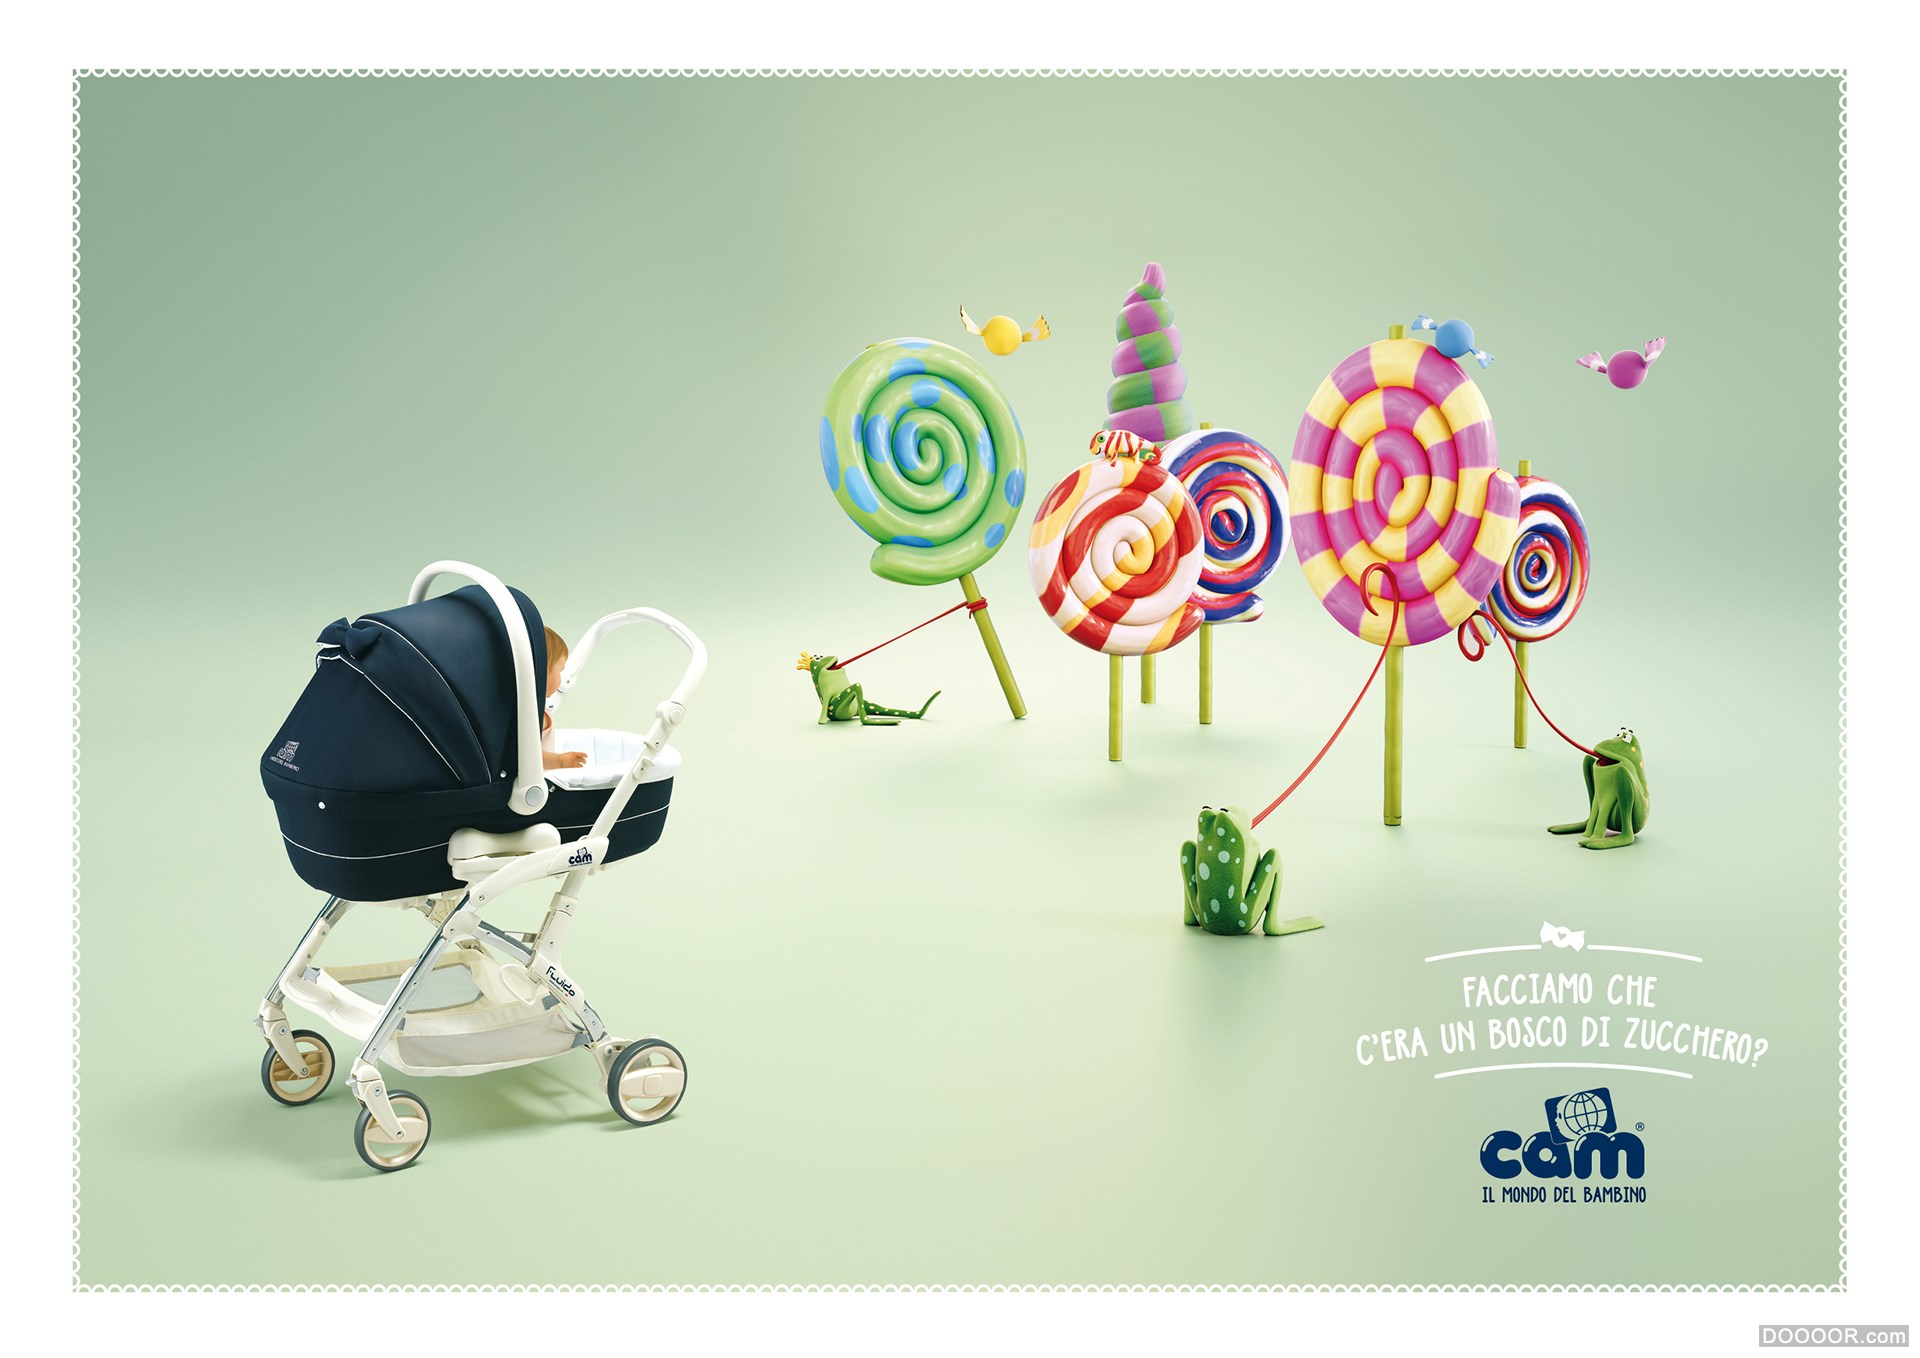 CAM婴童世界创意玩具广告-意大利vincenzo celli [17P] 15.jpg